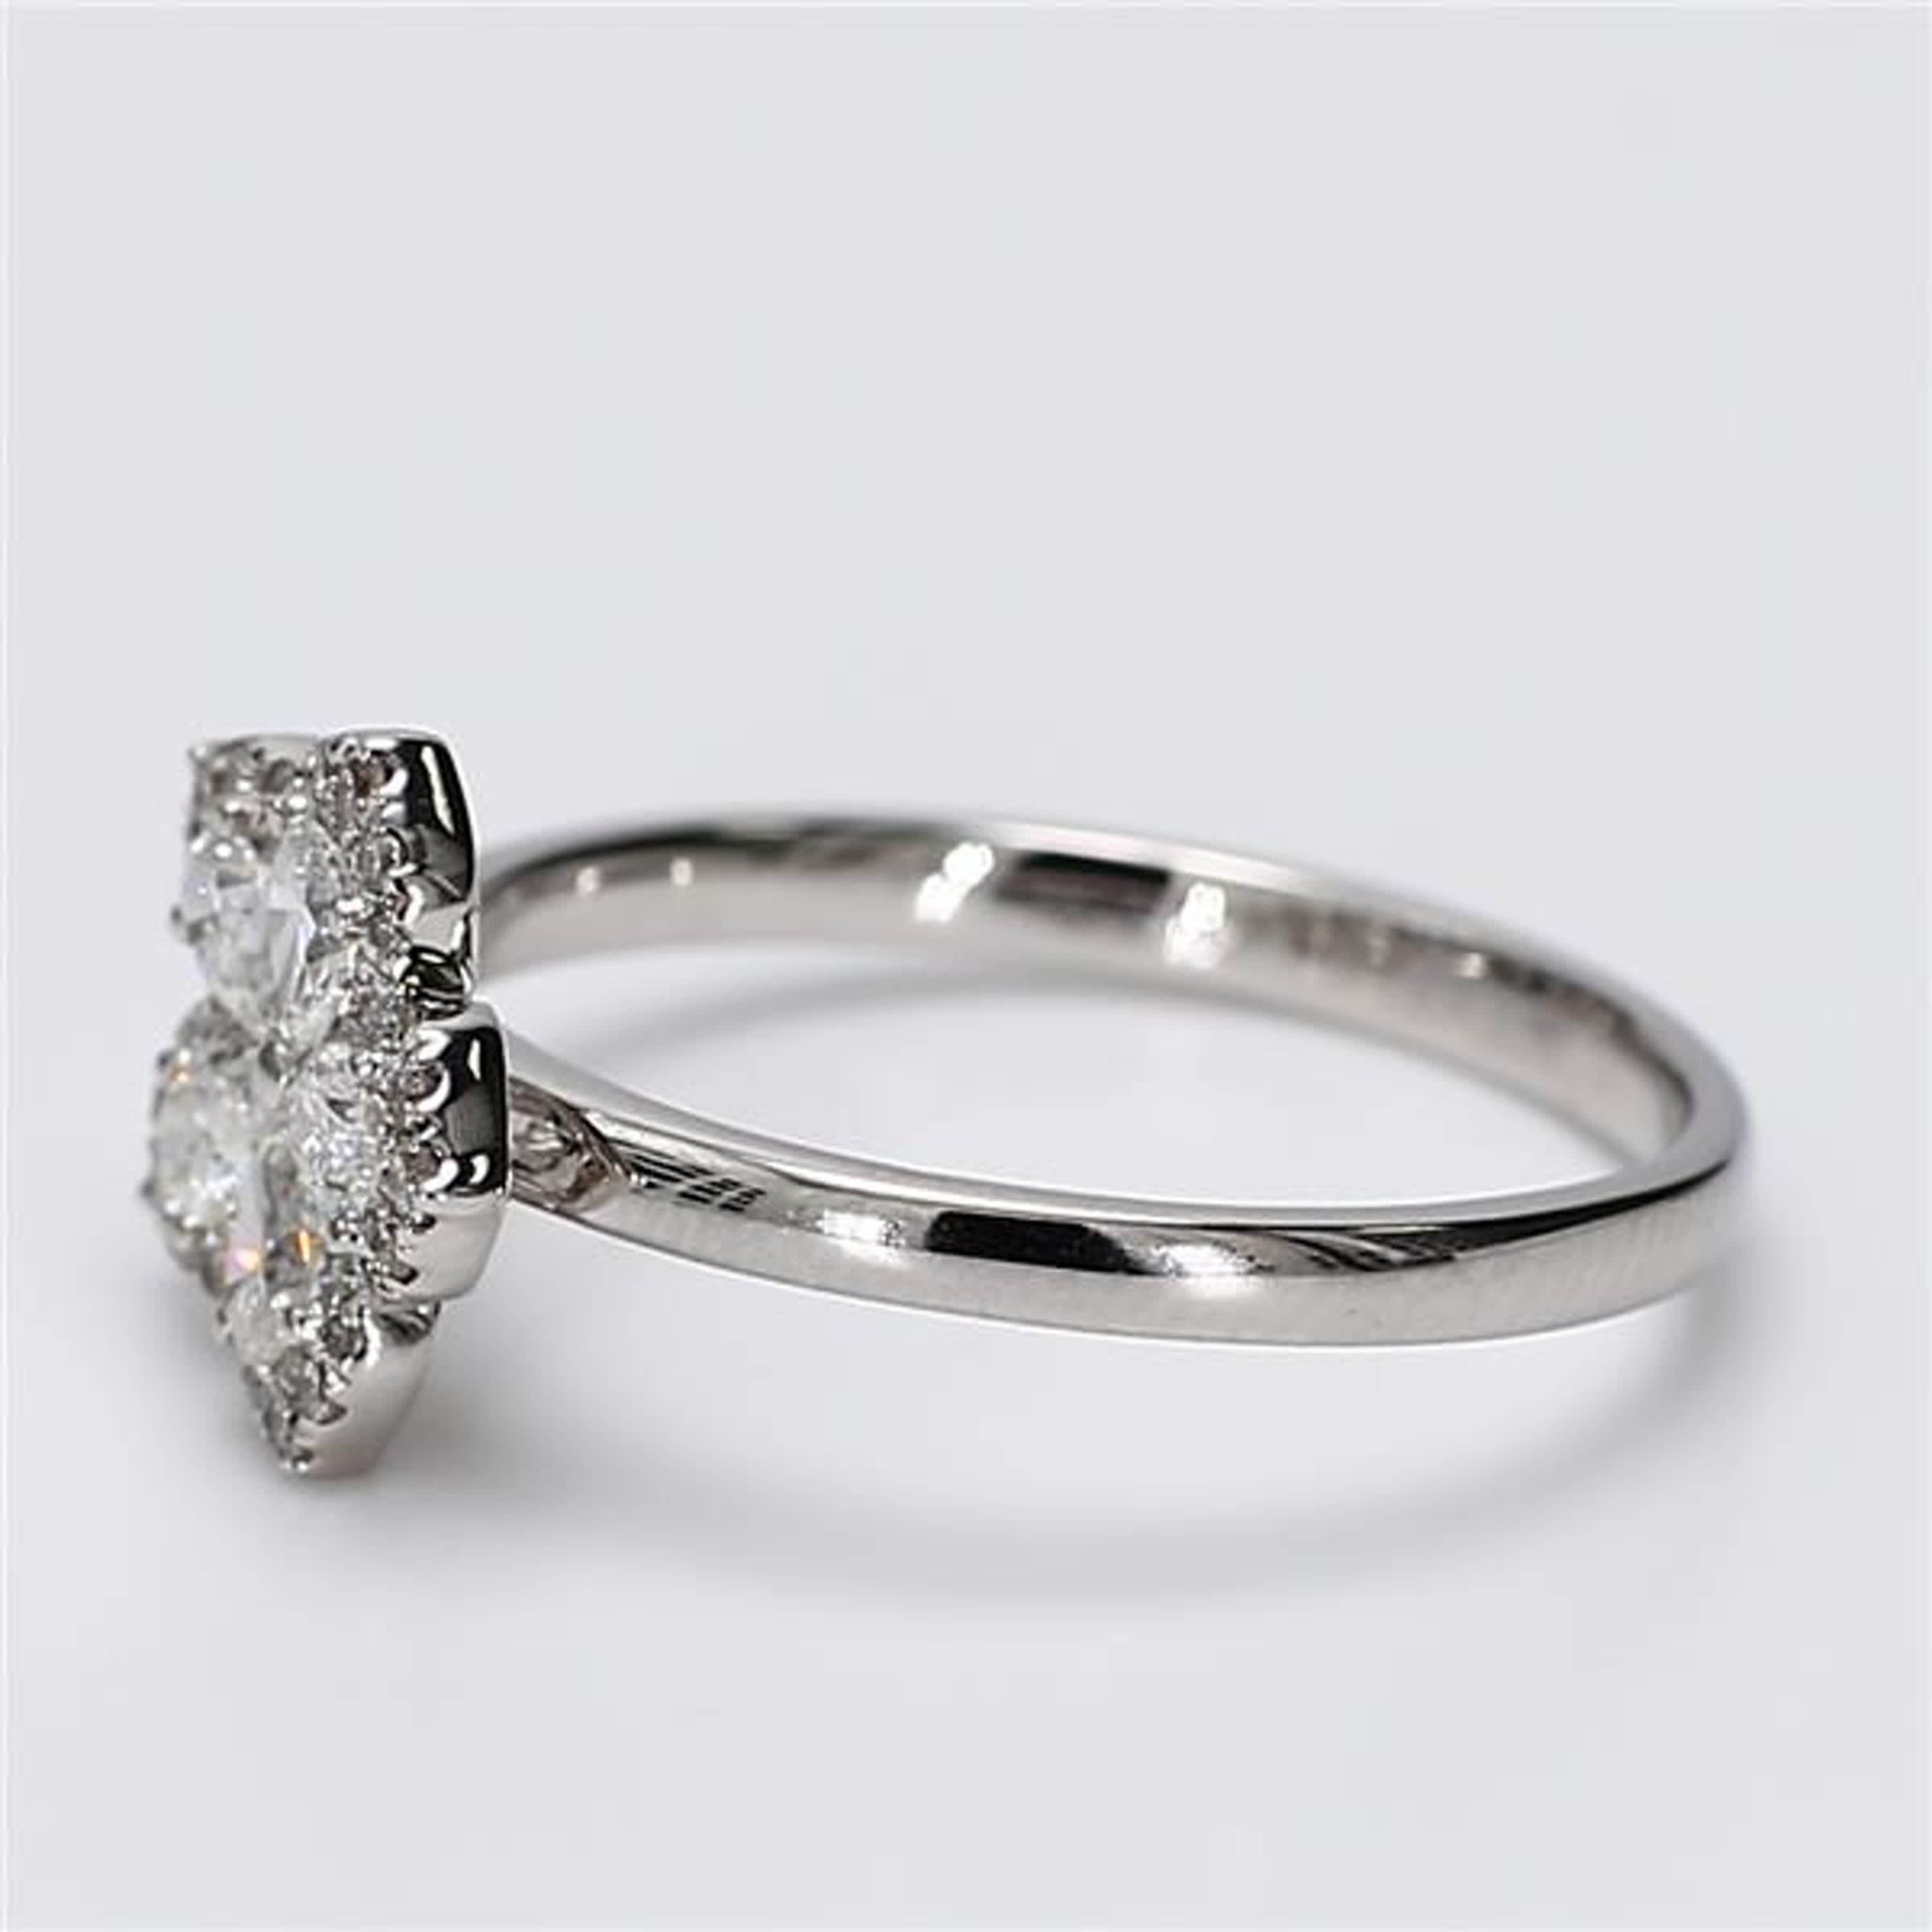 Natural White Pear and Round Diamond .52 Carat TW White Gold Fashion Ring